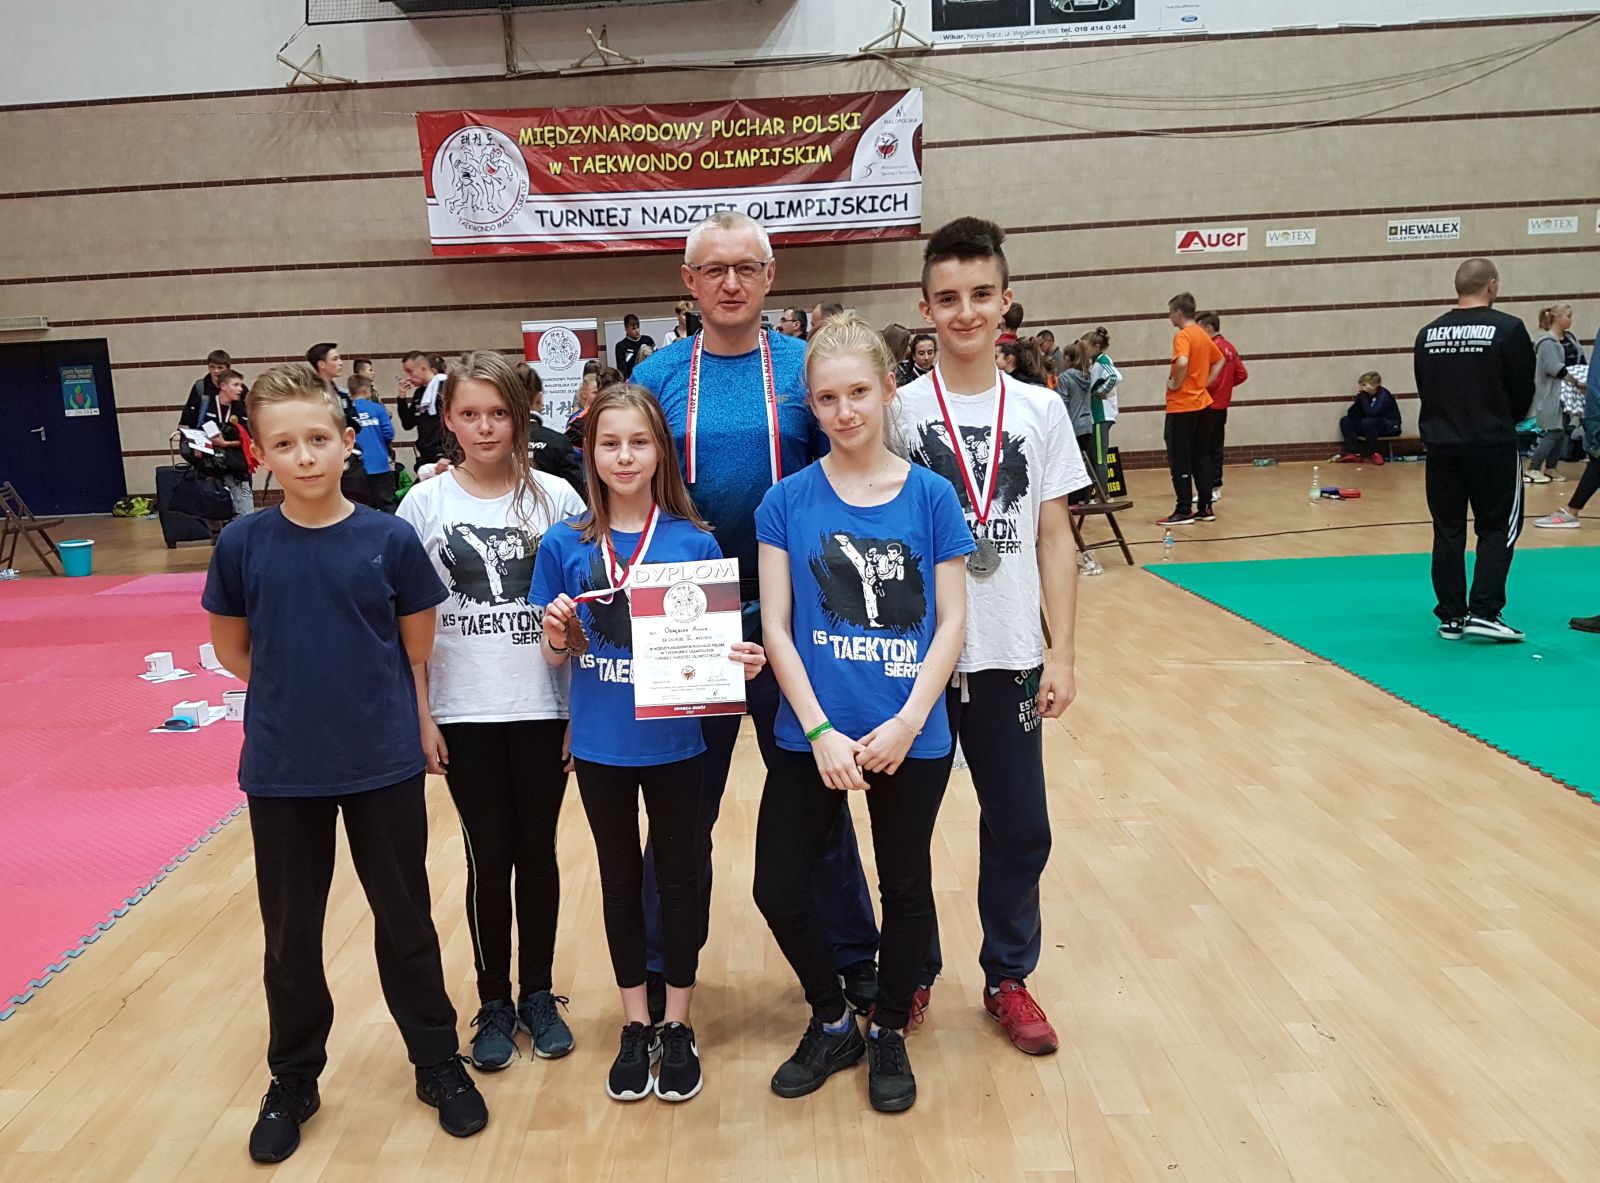 Puchar Polski w Taekwondo Olimpijskim Maopolska Cup, 21.10.2017 r.